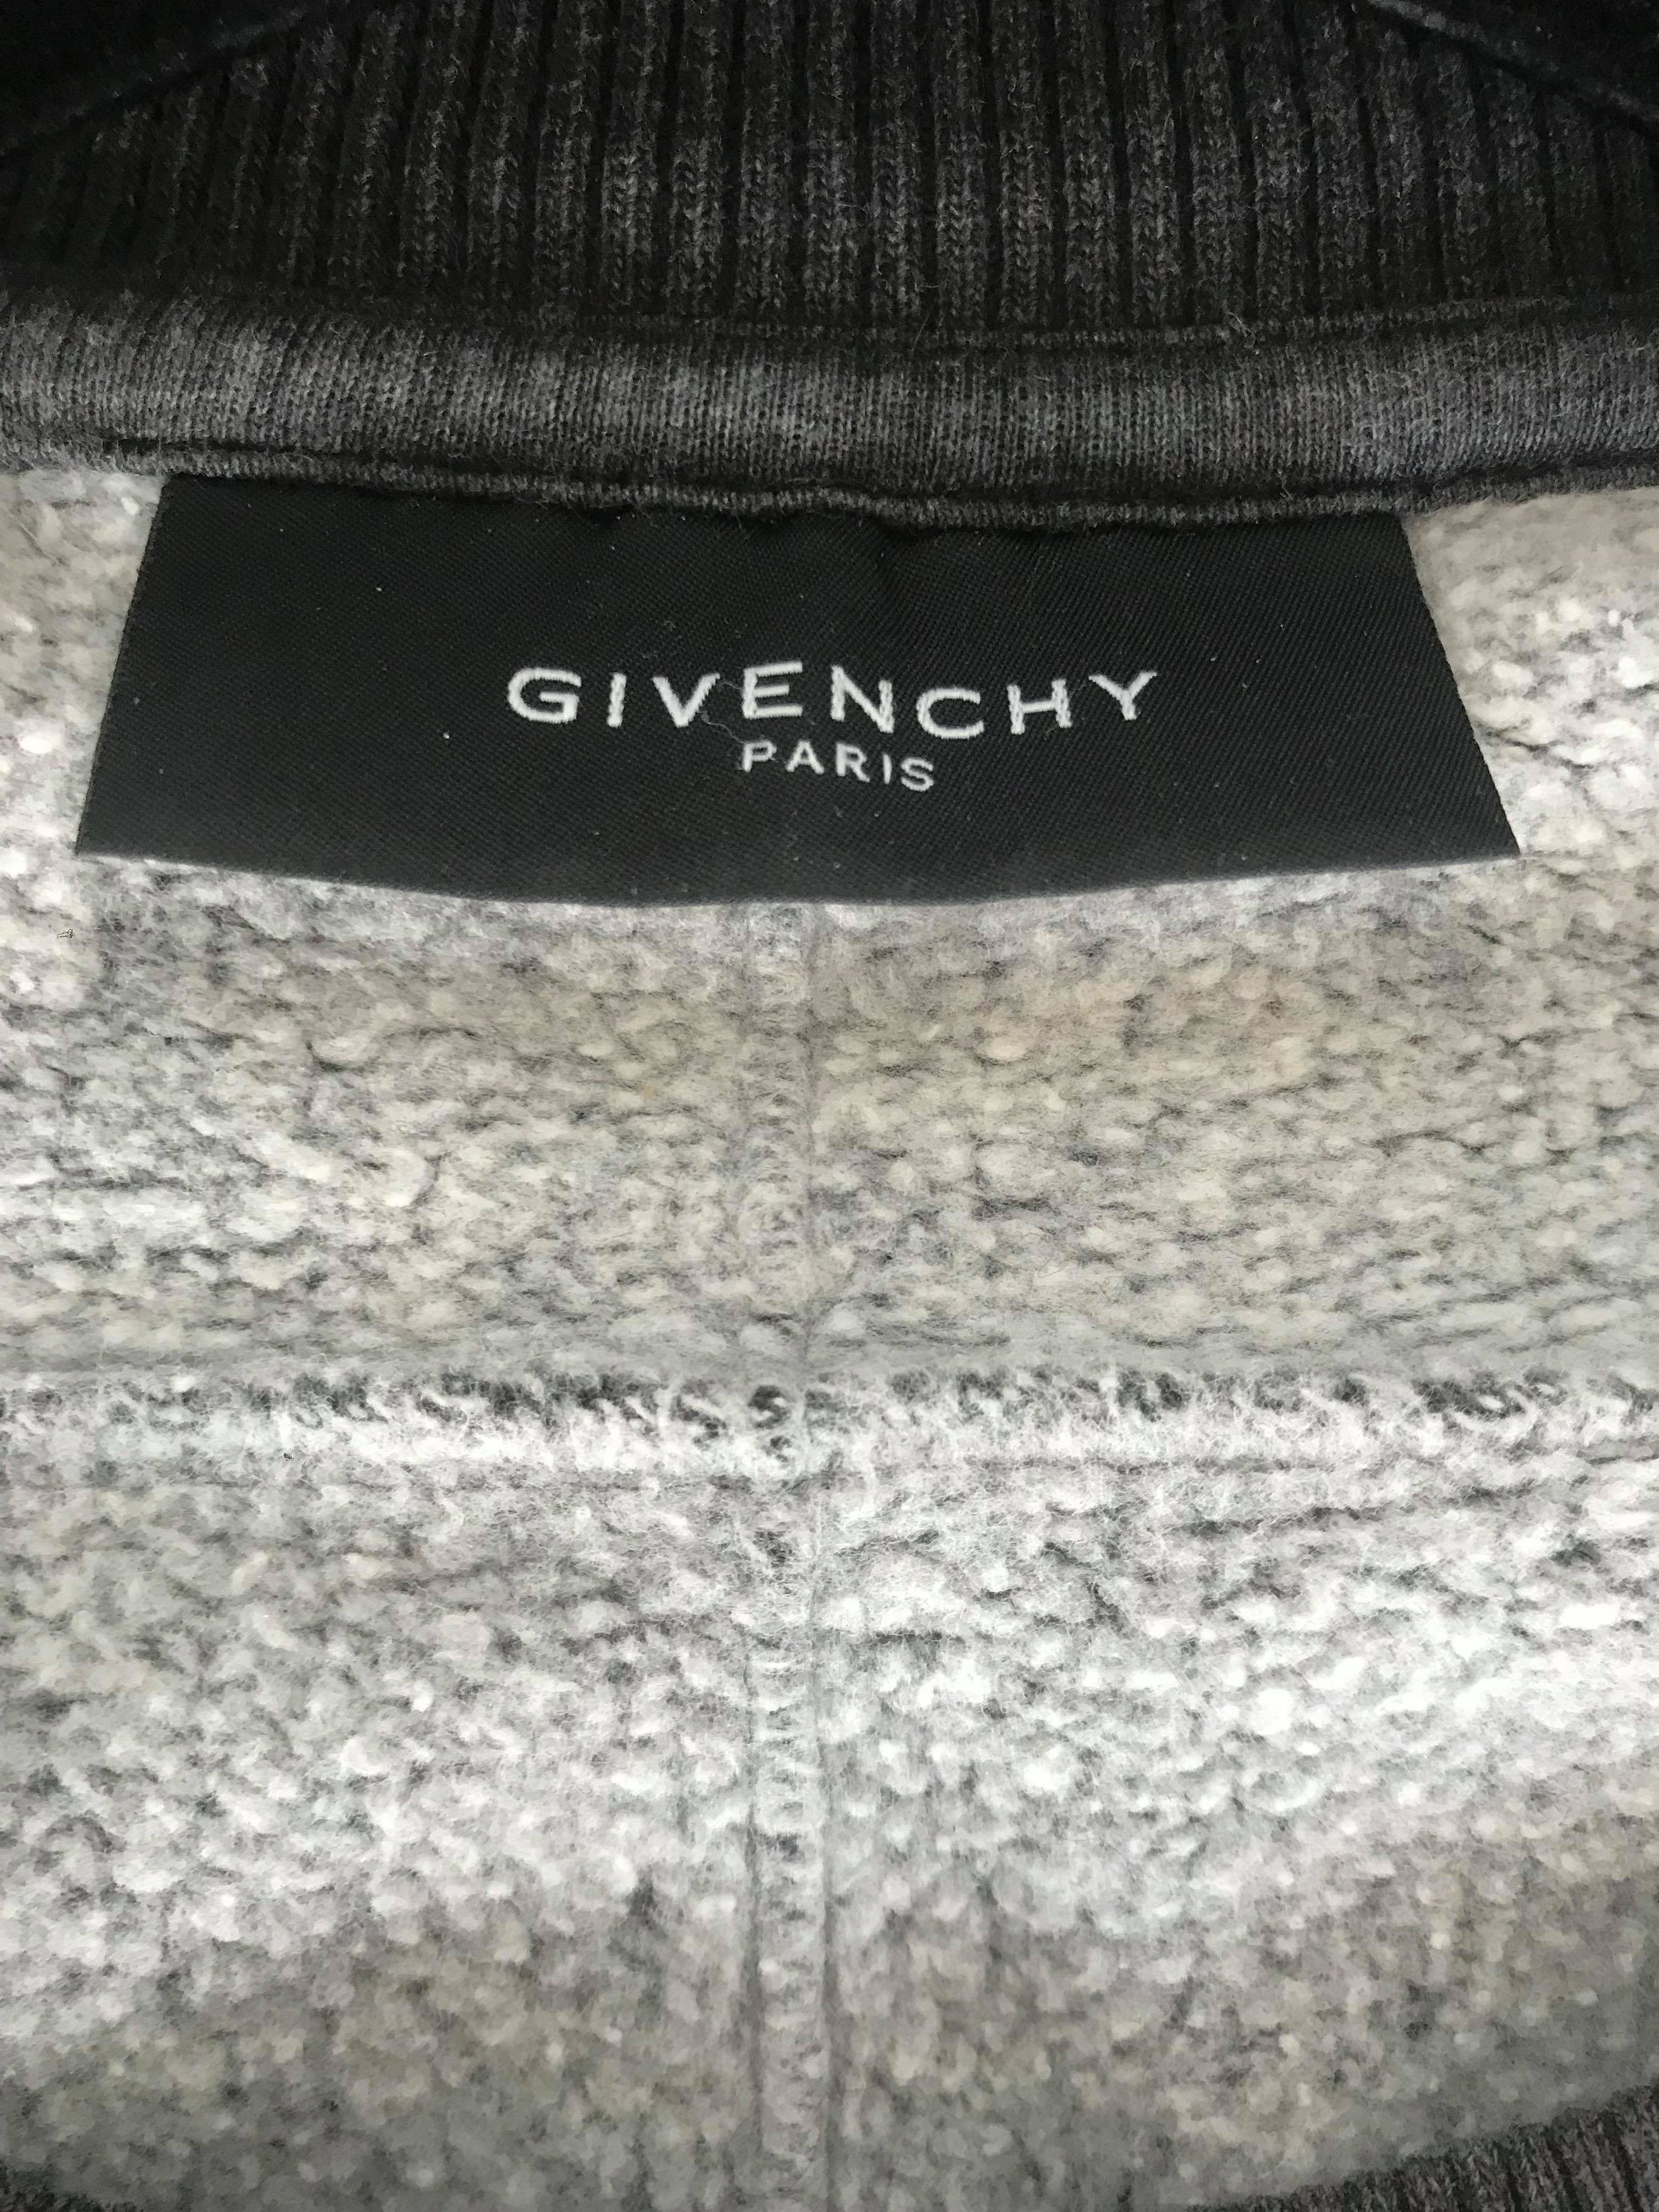 Givenchy Givenchy Grey Doberman Sweatshirt Size US L / EU 52-54 / 3 - 3 Thumbnail